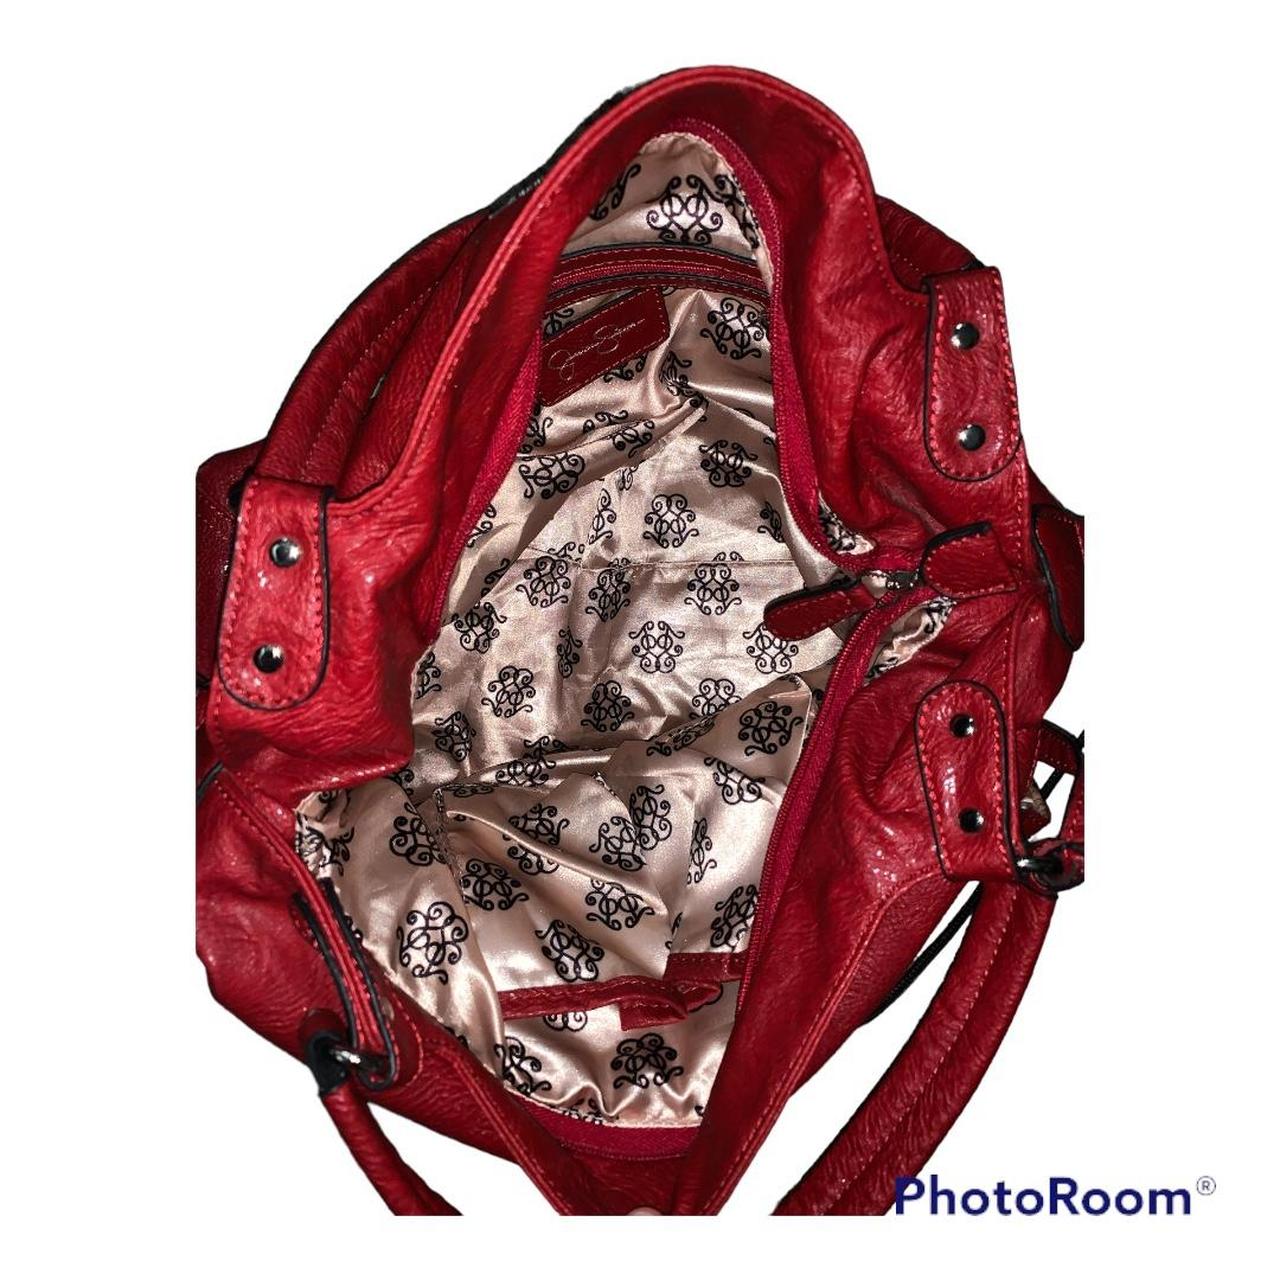 Jessica Simpson bag. In great condition! No returns - Depop